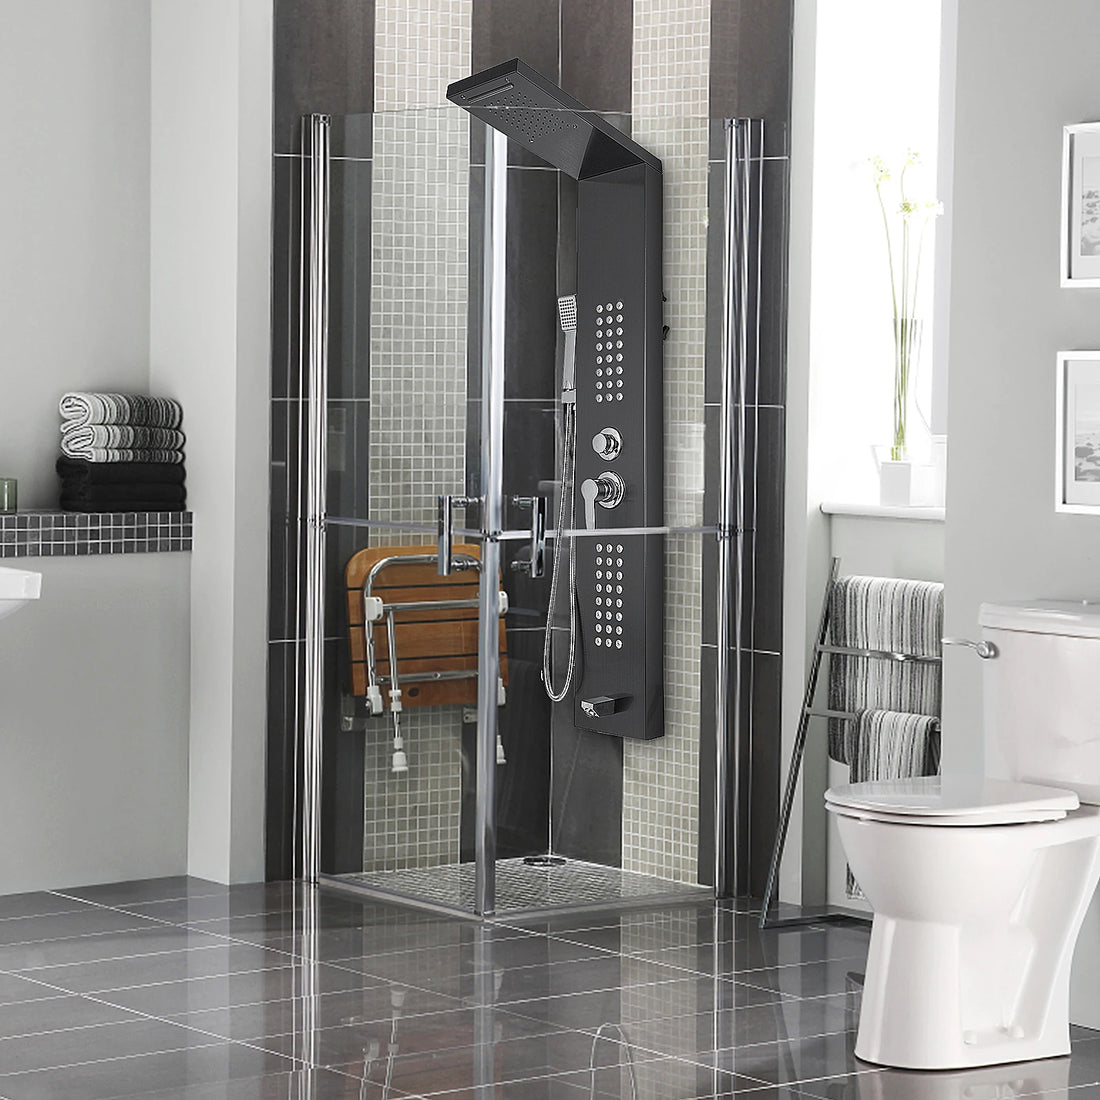 VEVOR  LED Light Shower Panel System Waterfall Rain Shower Faucet SPA Massage Jets Tub Shower With Bidet Bath Taps For Bathroom